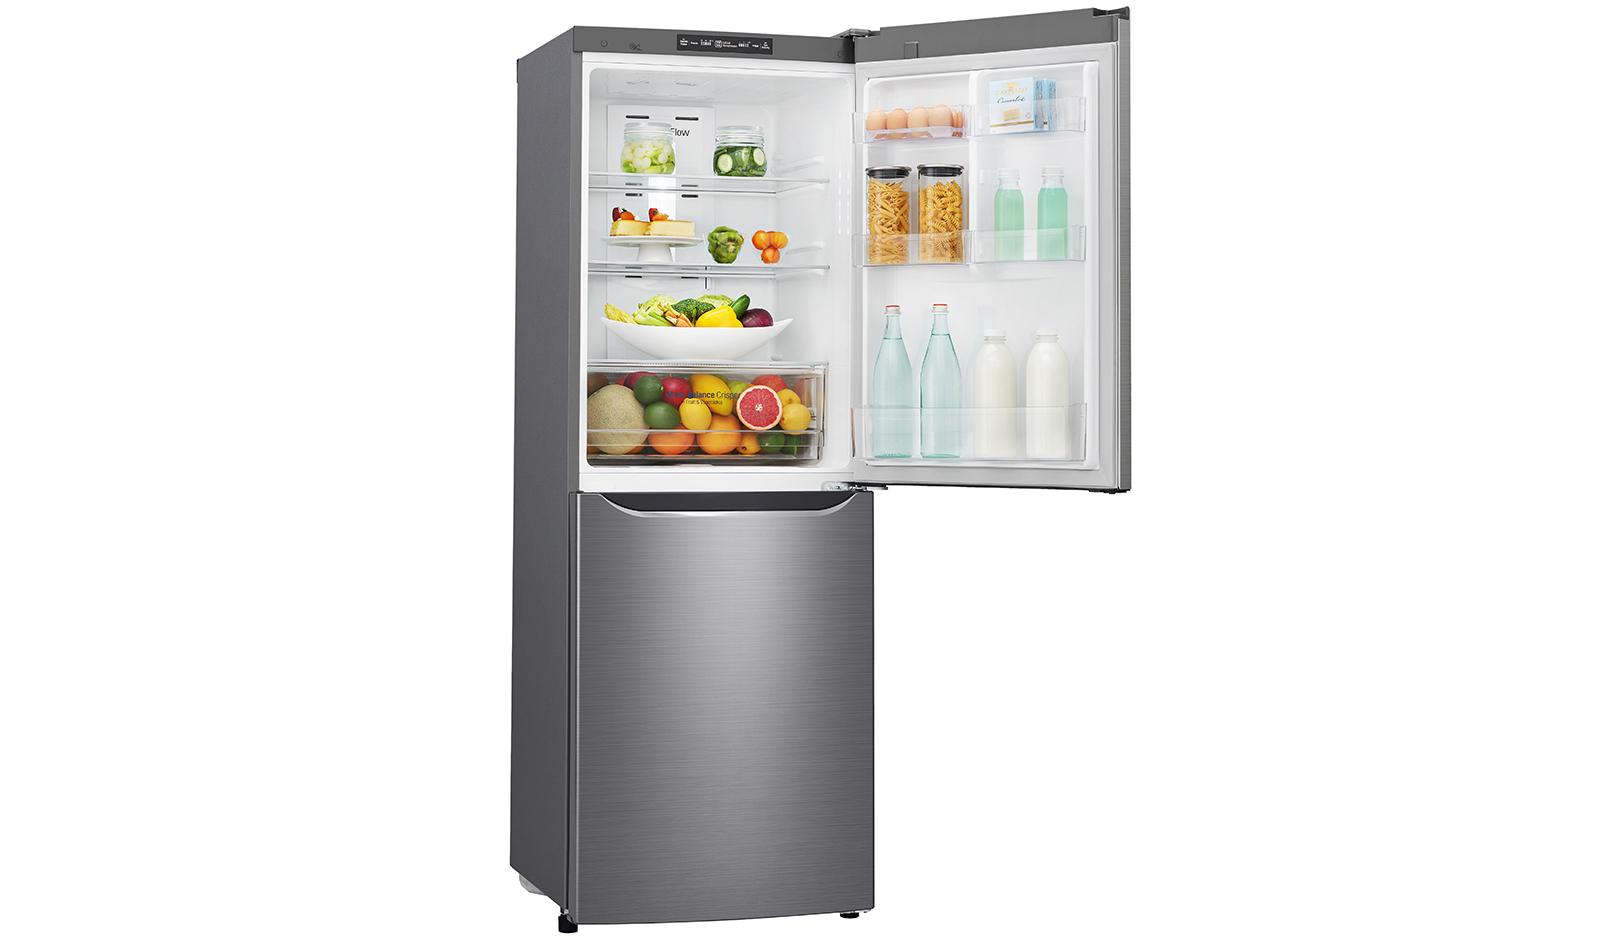 Холодильник LG GA-B389SMCZ. Функциональность